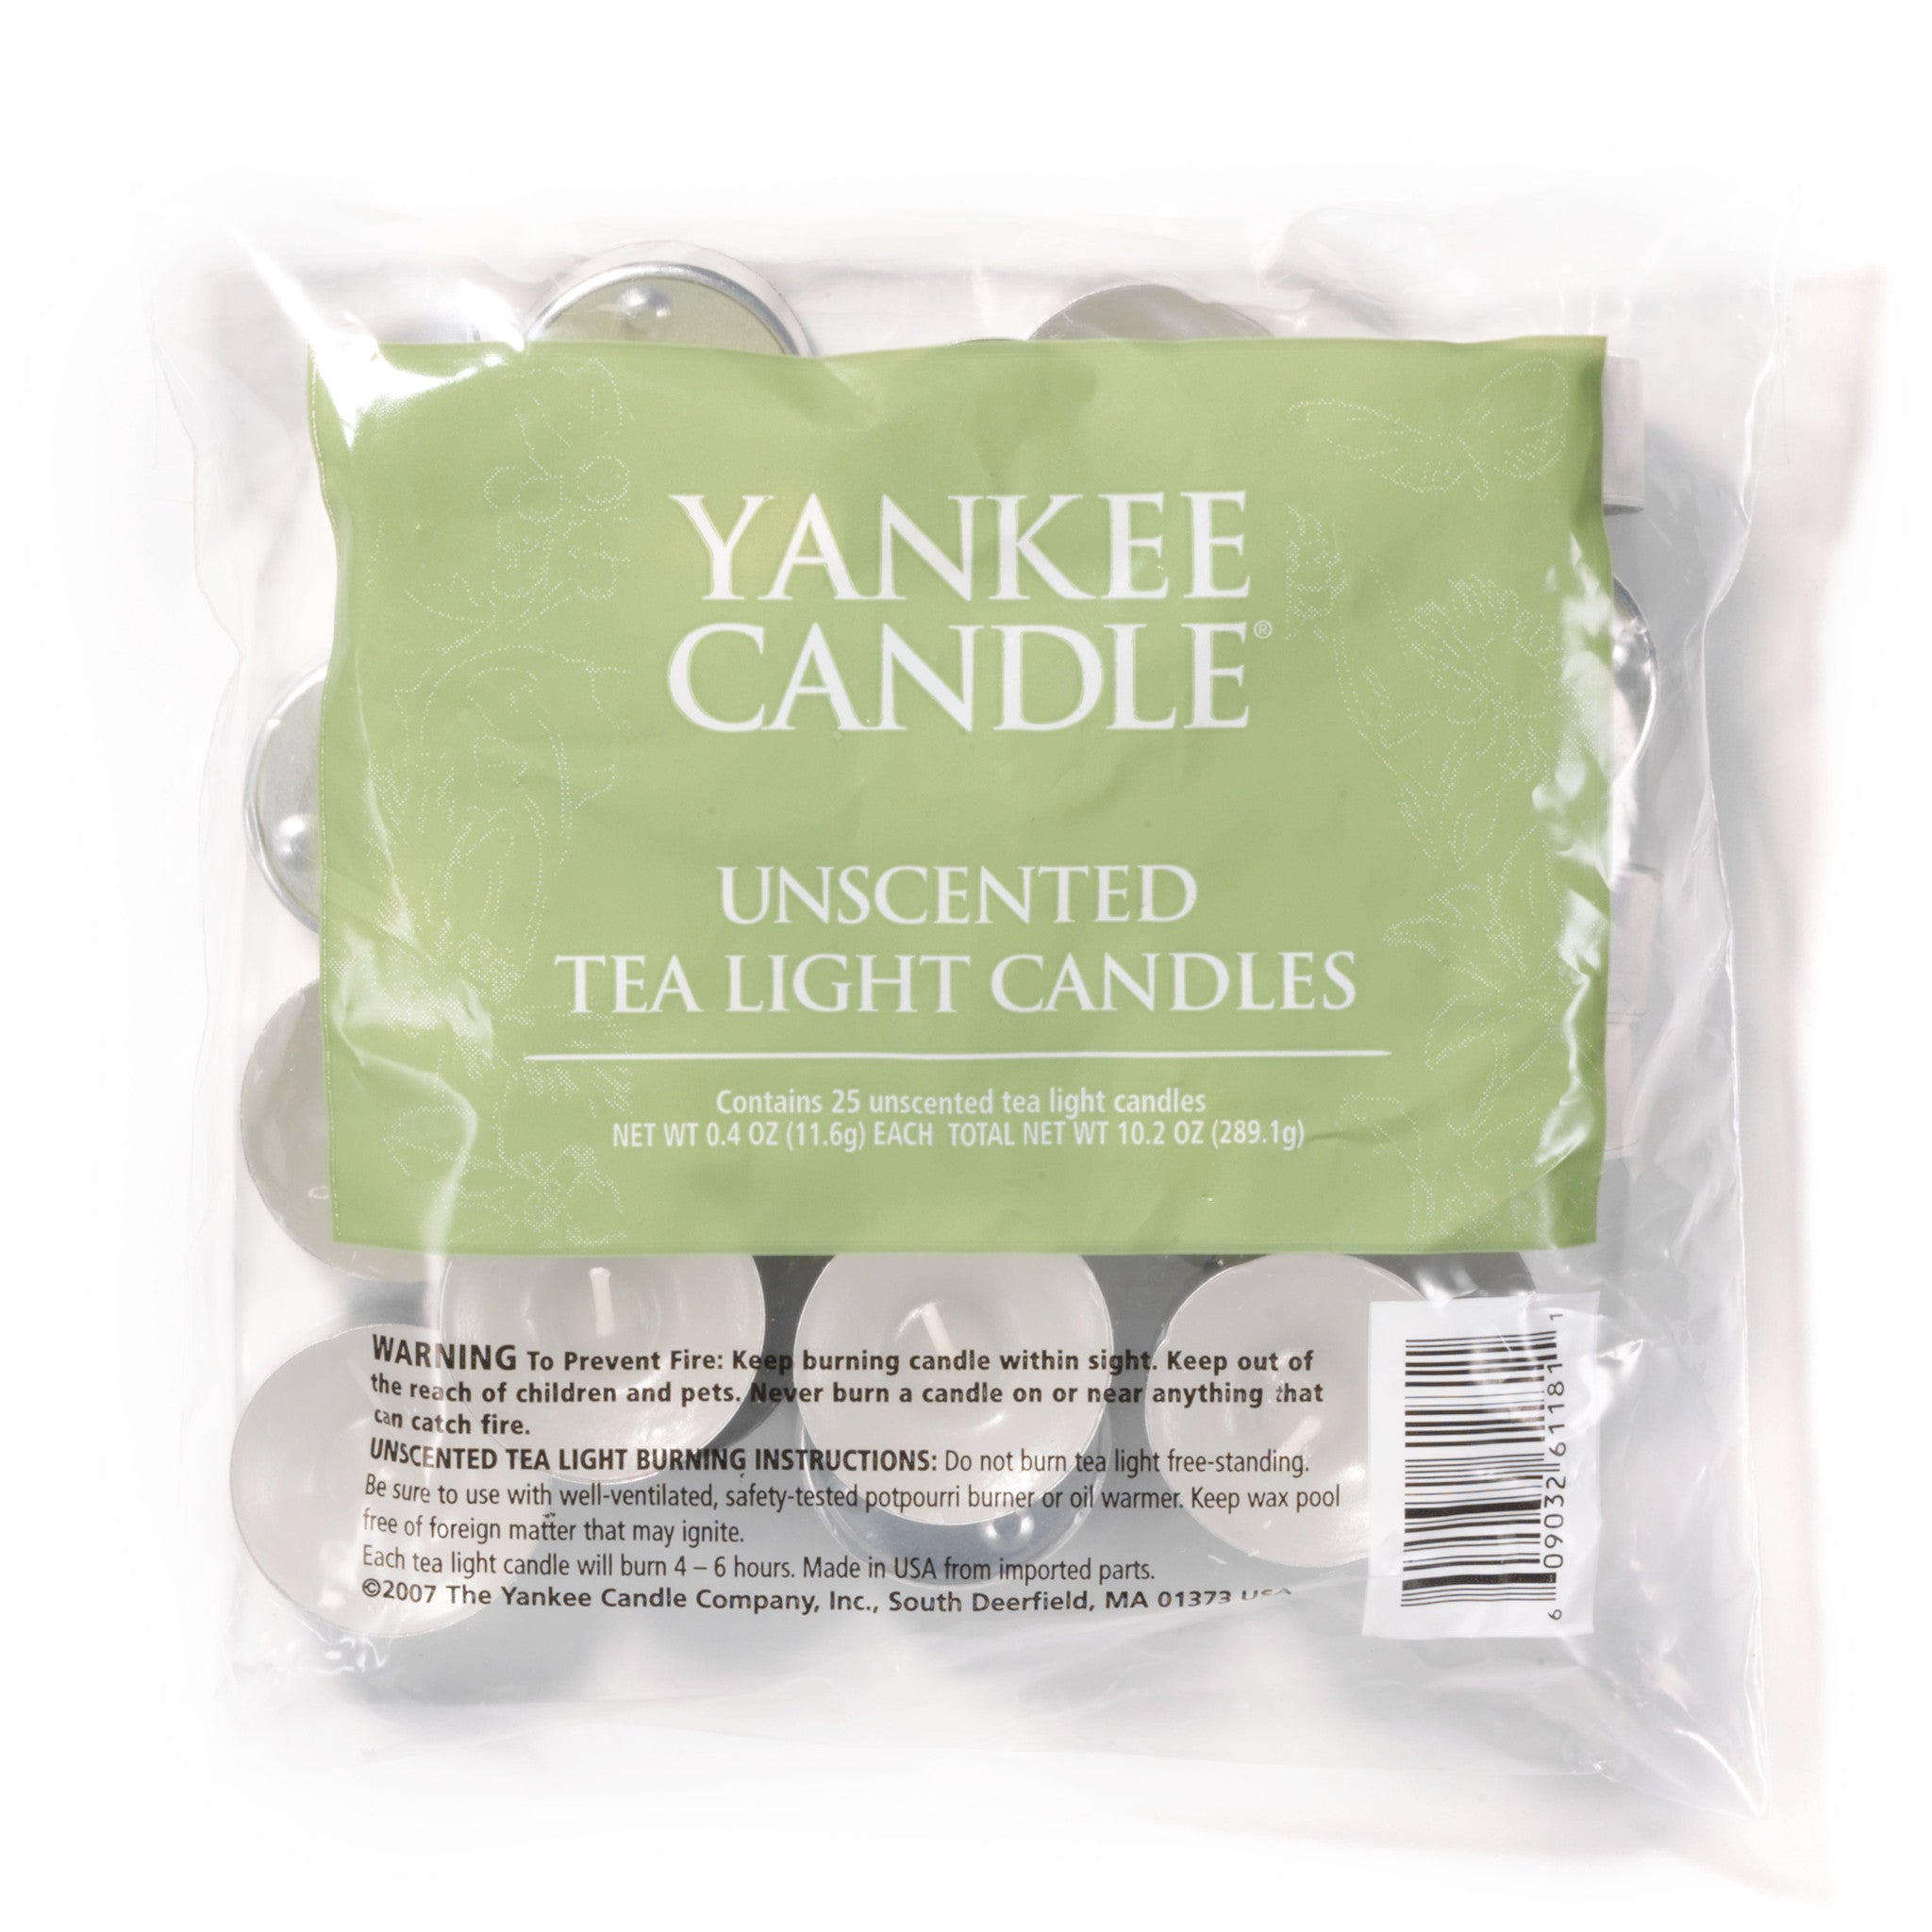 YANKEE CANDLE TEA LIGHT CANDELINE PROFUMATE - Detercarta srls